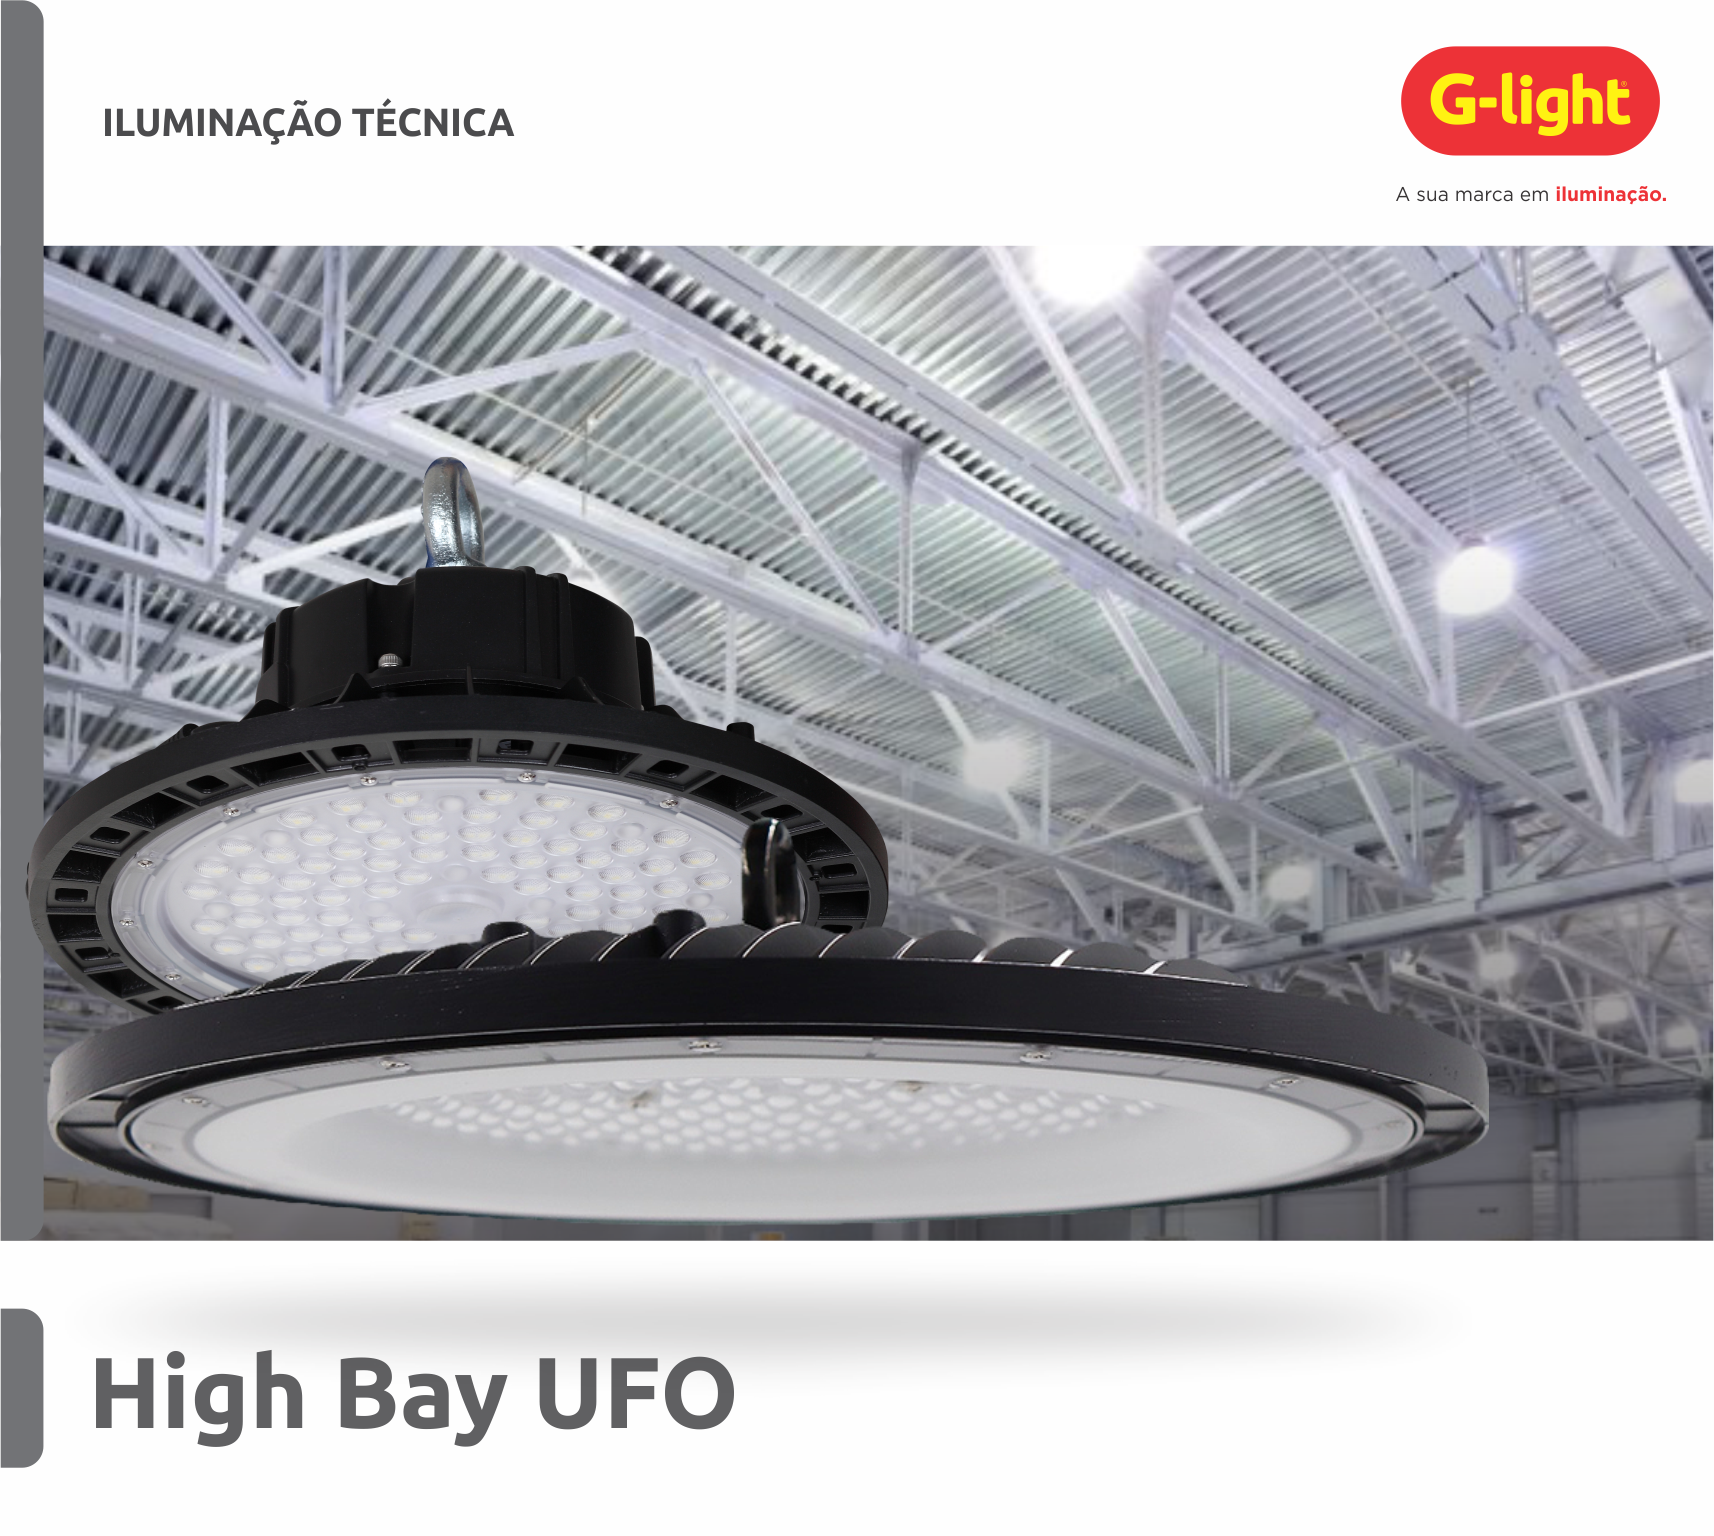 High Bay UFO